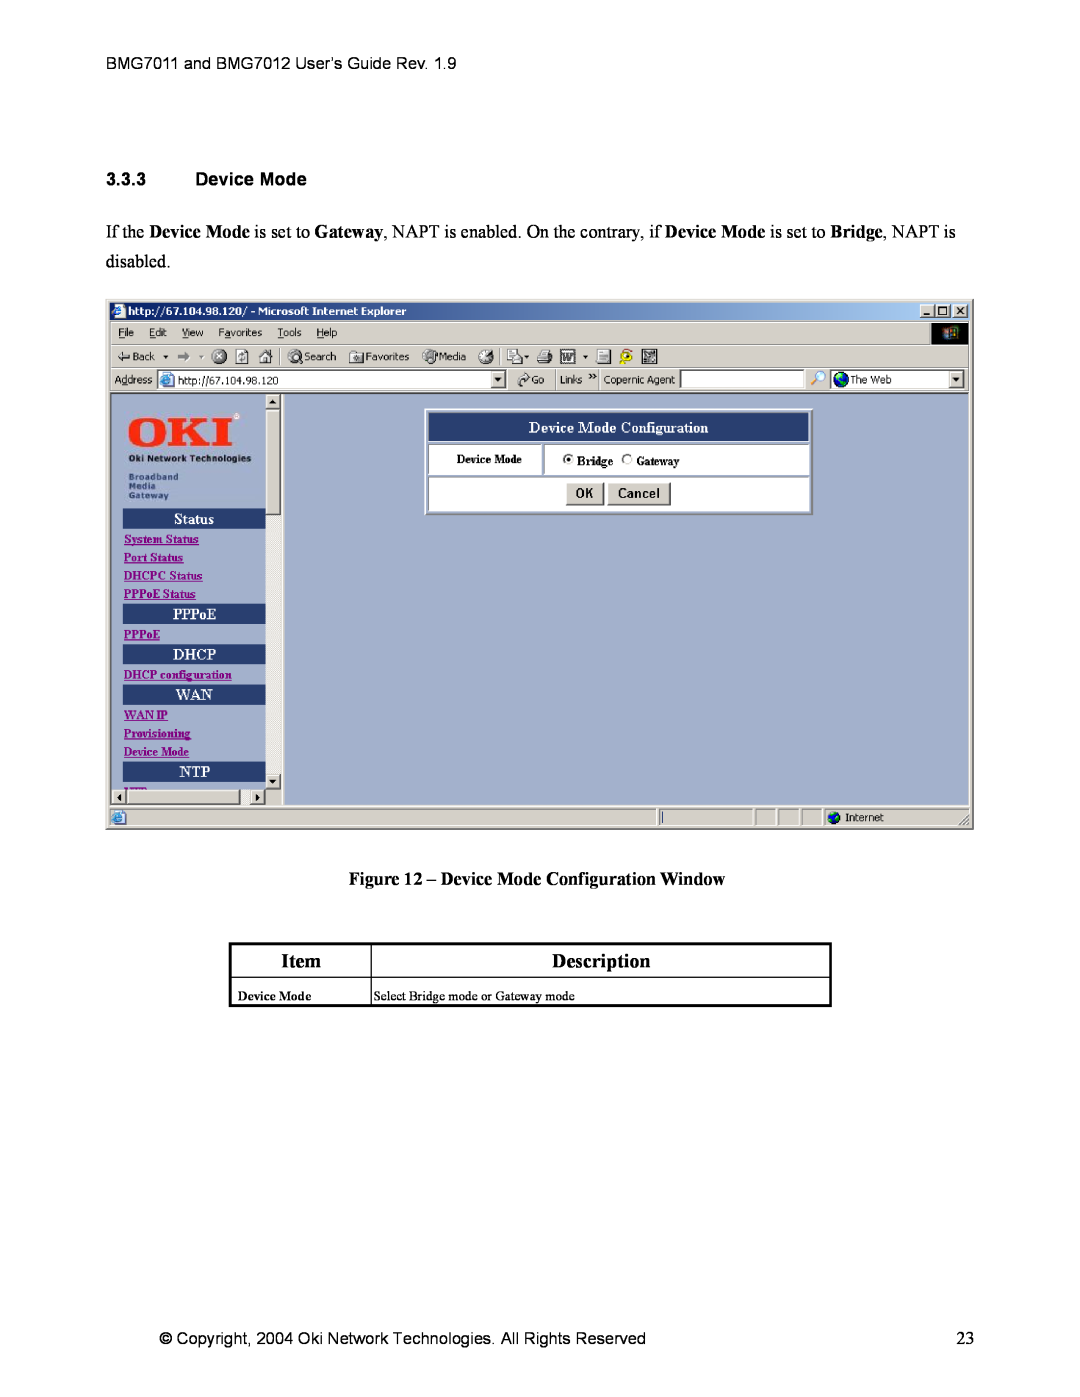 Oki BMG7011, BMG7012 manual 3.3.3Device Mode, Device Mode Configuration Window, Item, Description 